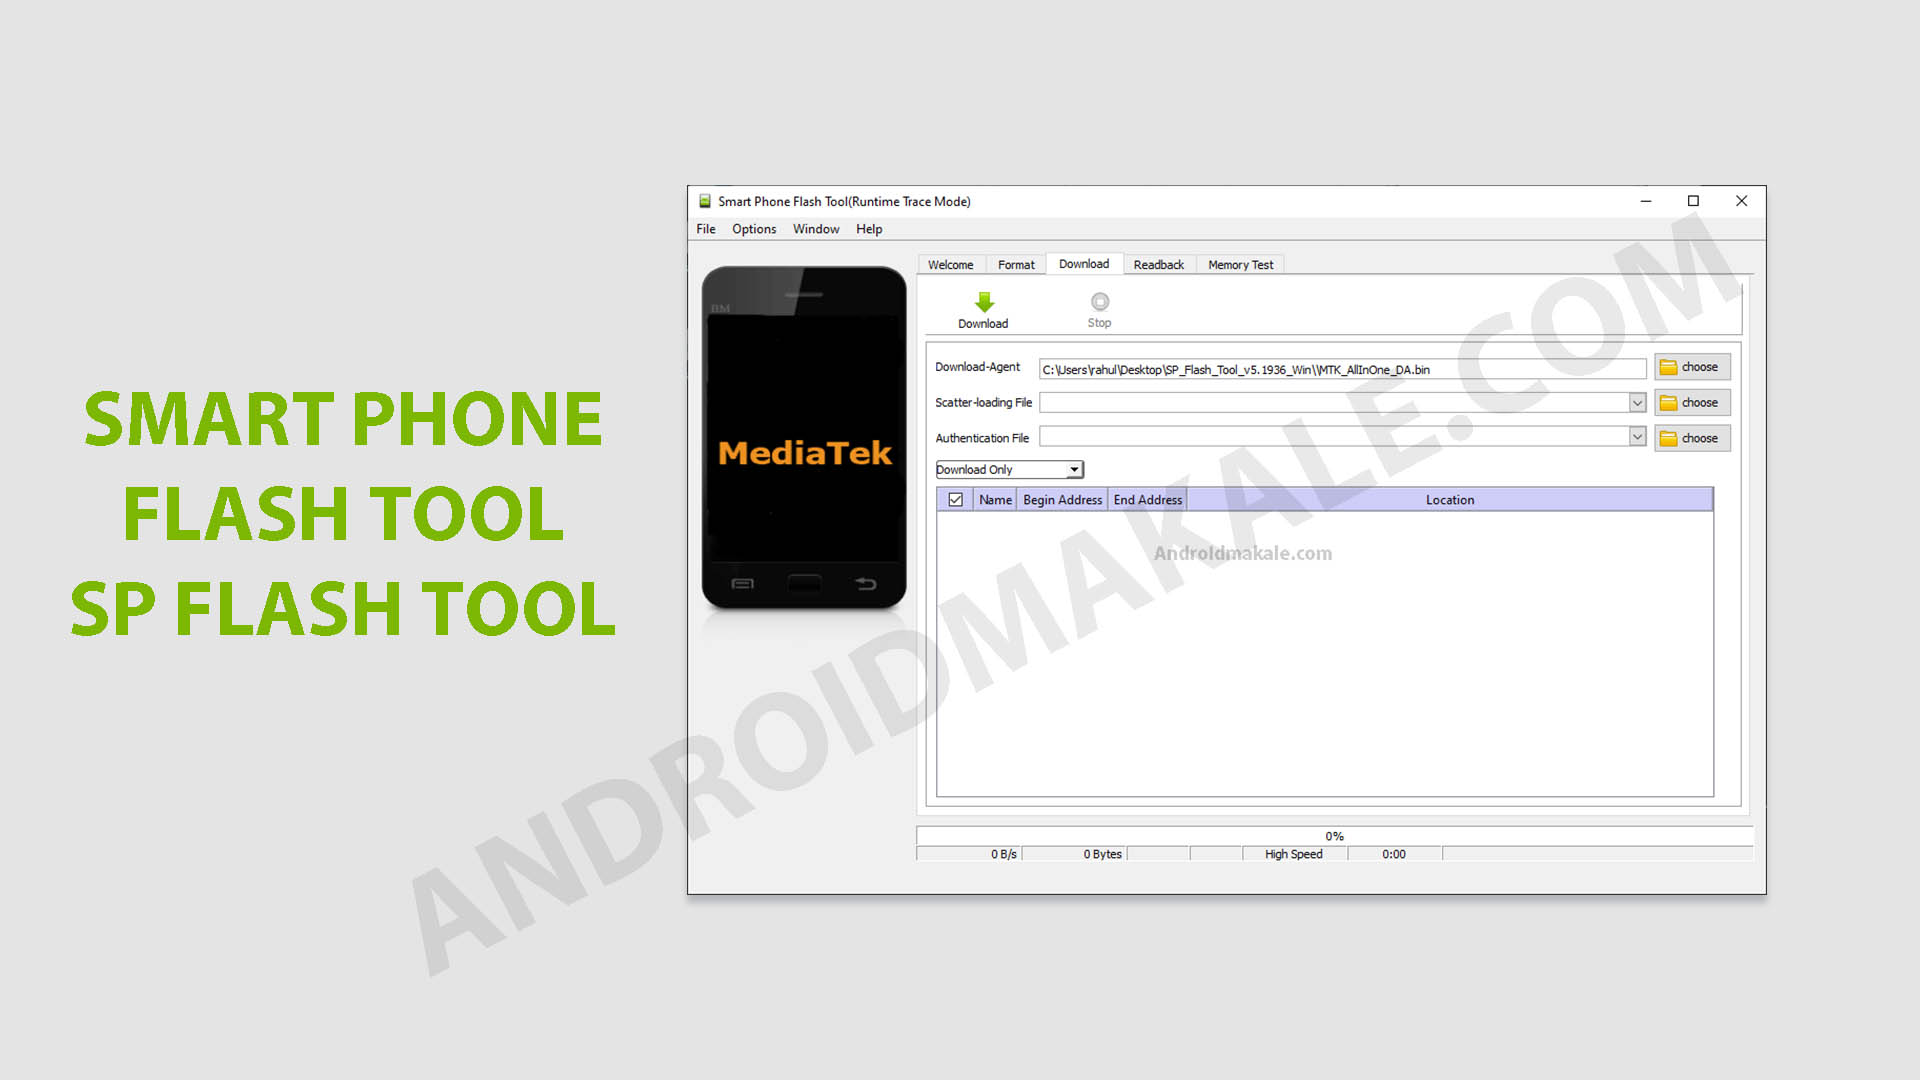 Smart Phone Flash Tool Download İndir sp flash tool son sürüm sp flash tool latest sp flash tool smart phone flash tool indir download 